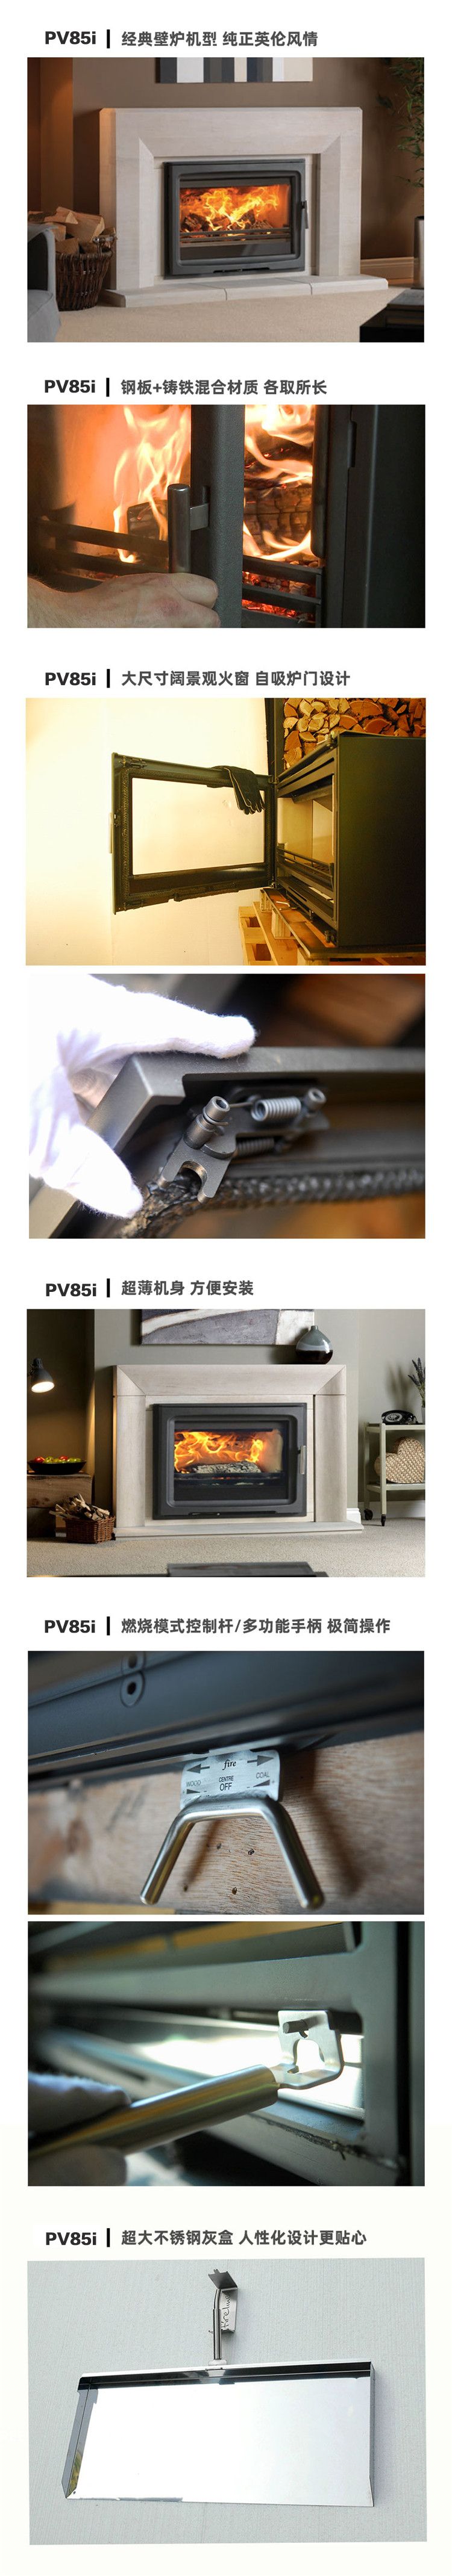 英国fireline单面真火壁炉-PV85i.jpg